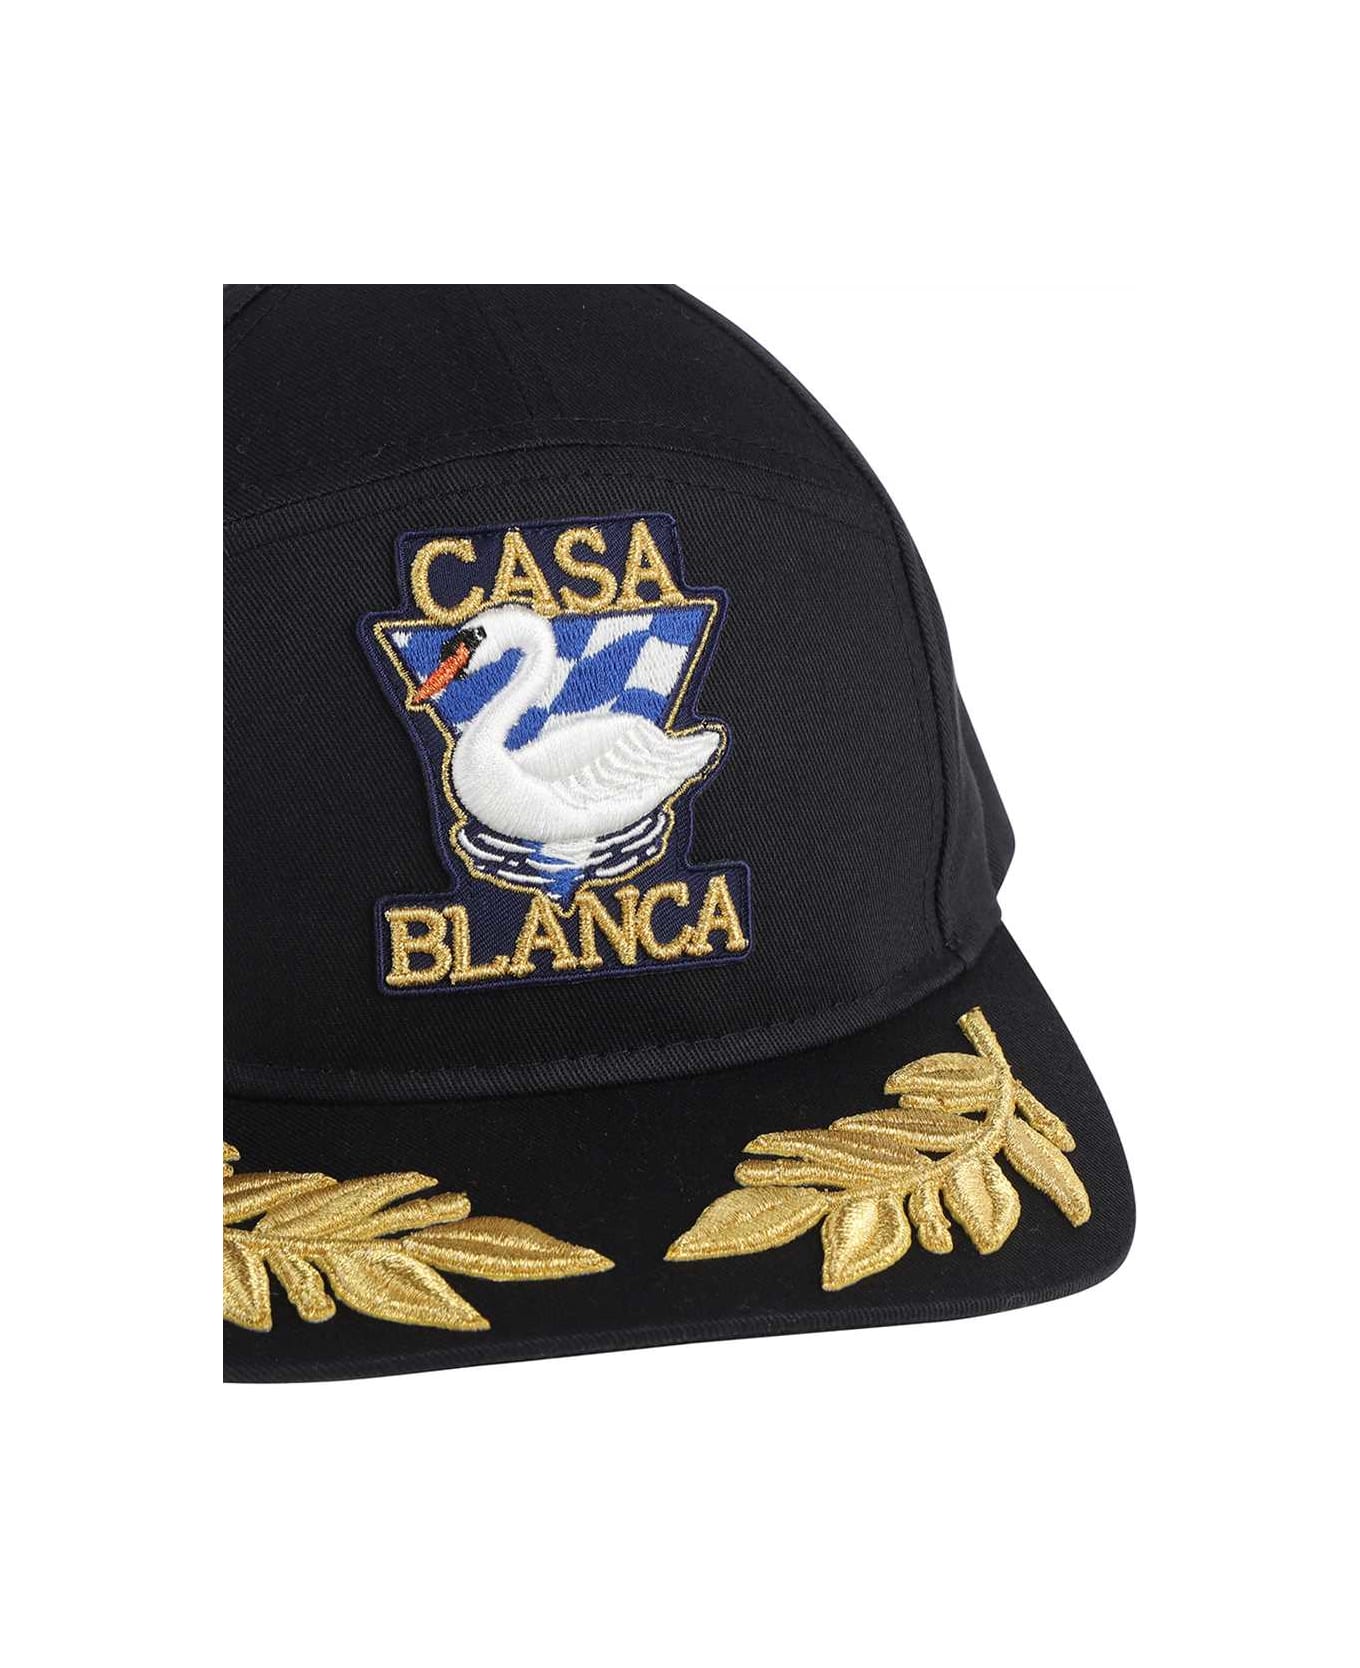 Casablanca Baseball Cap - black 帽子